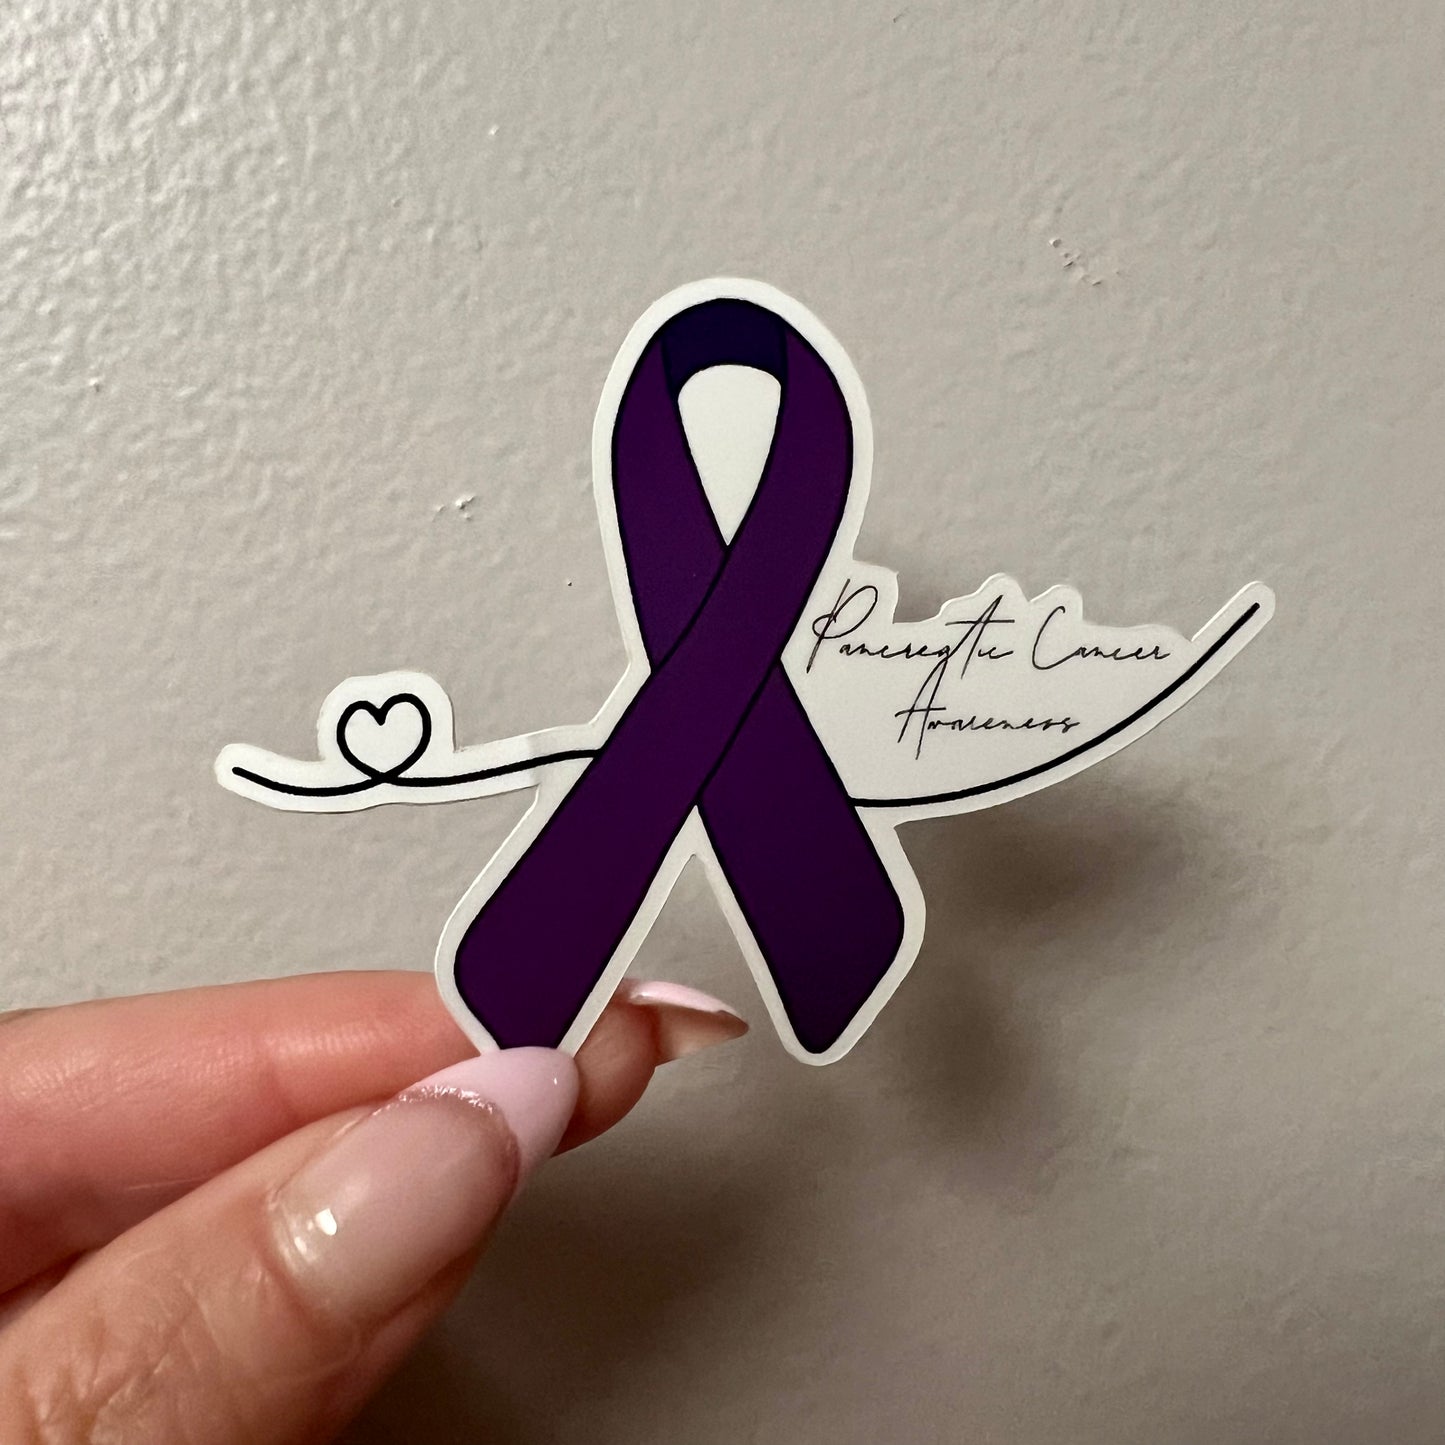 Pancreatic Cancer Awareness Sticker